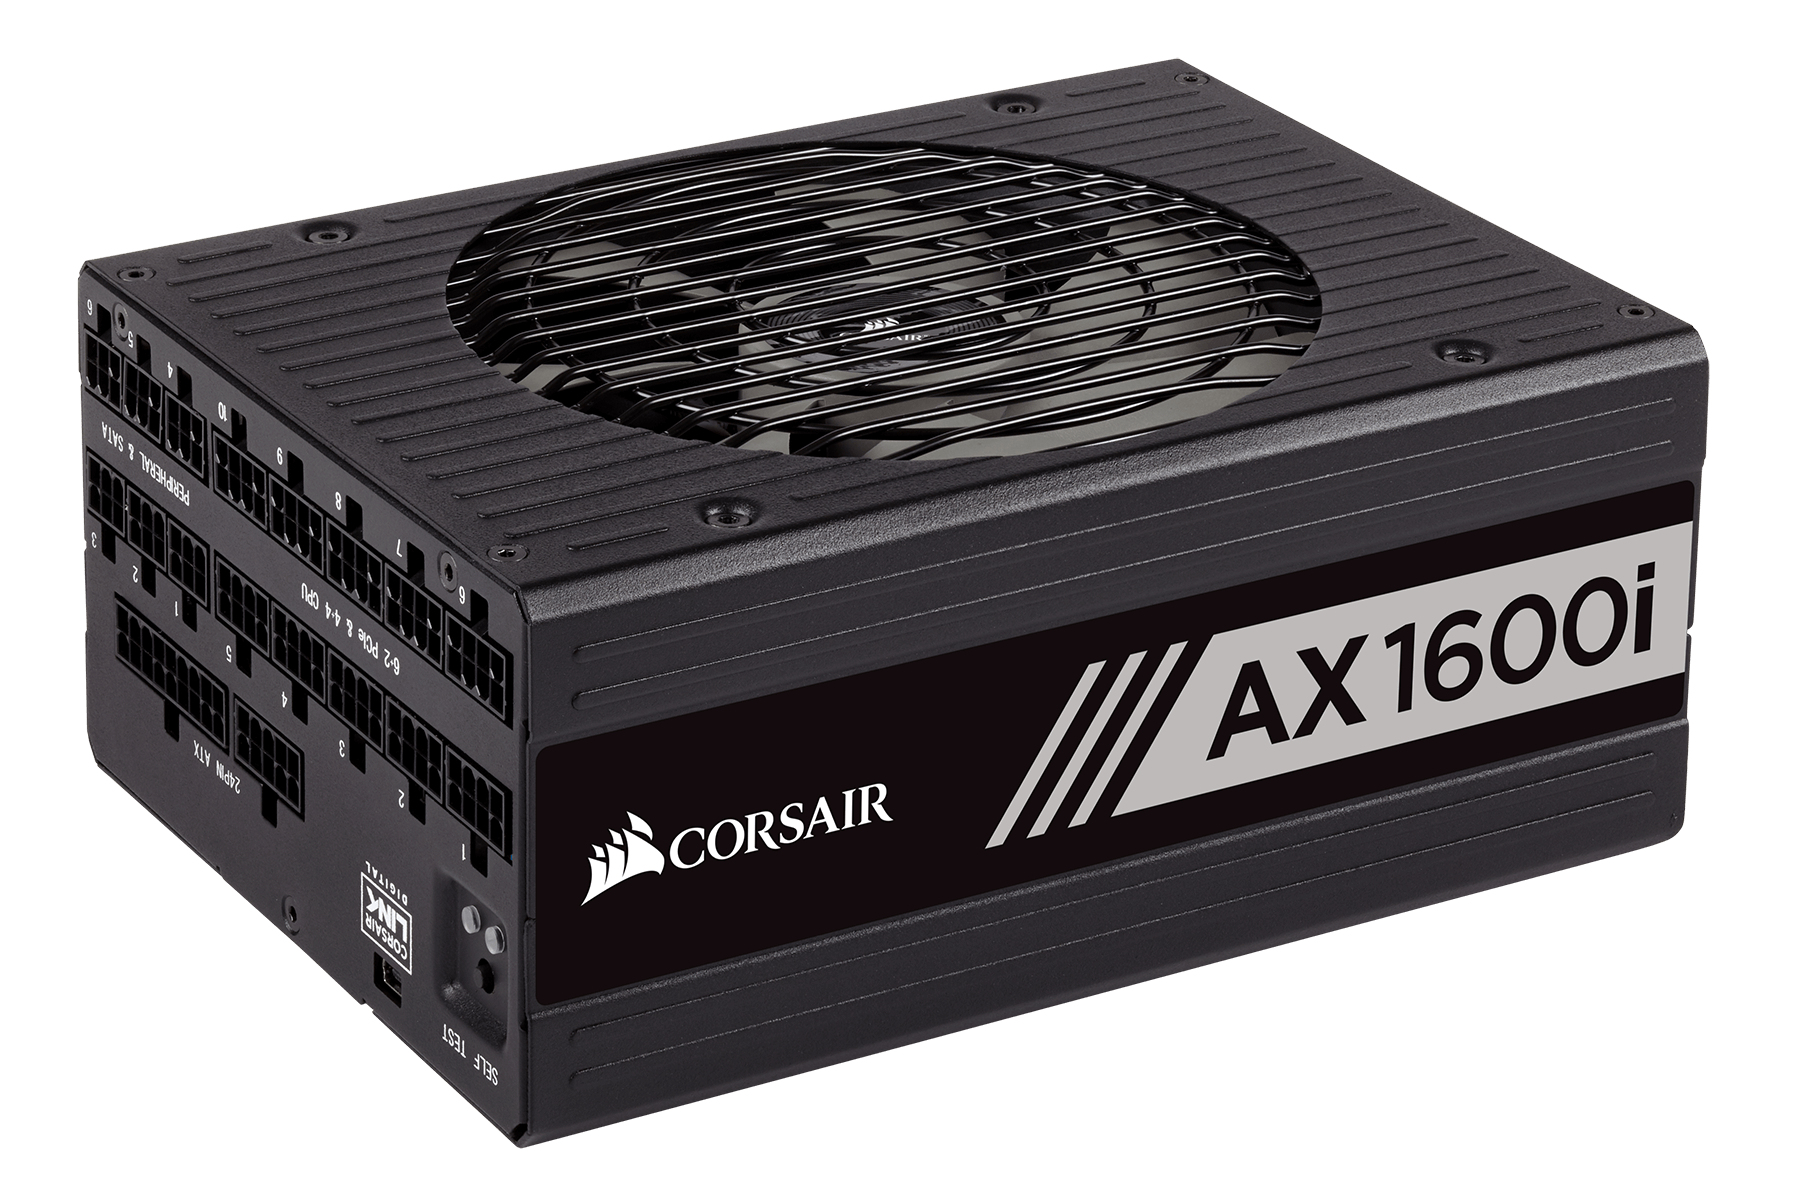 Corsair AX1600i Digital ATX Power Supply